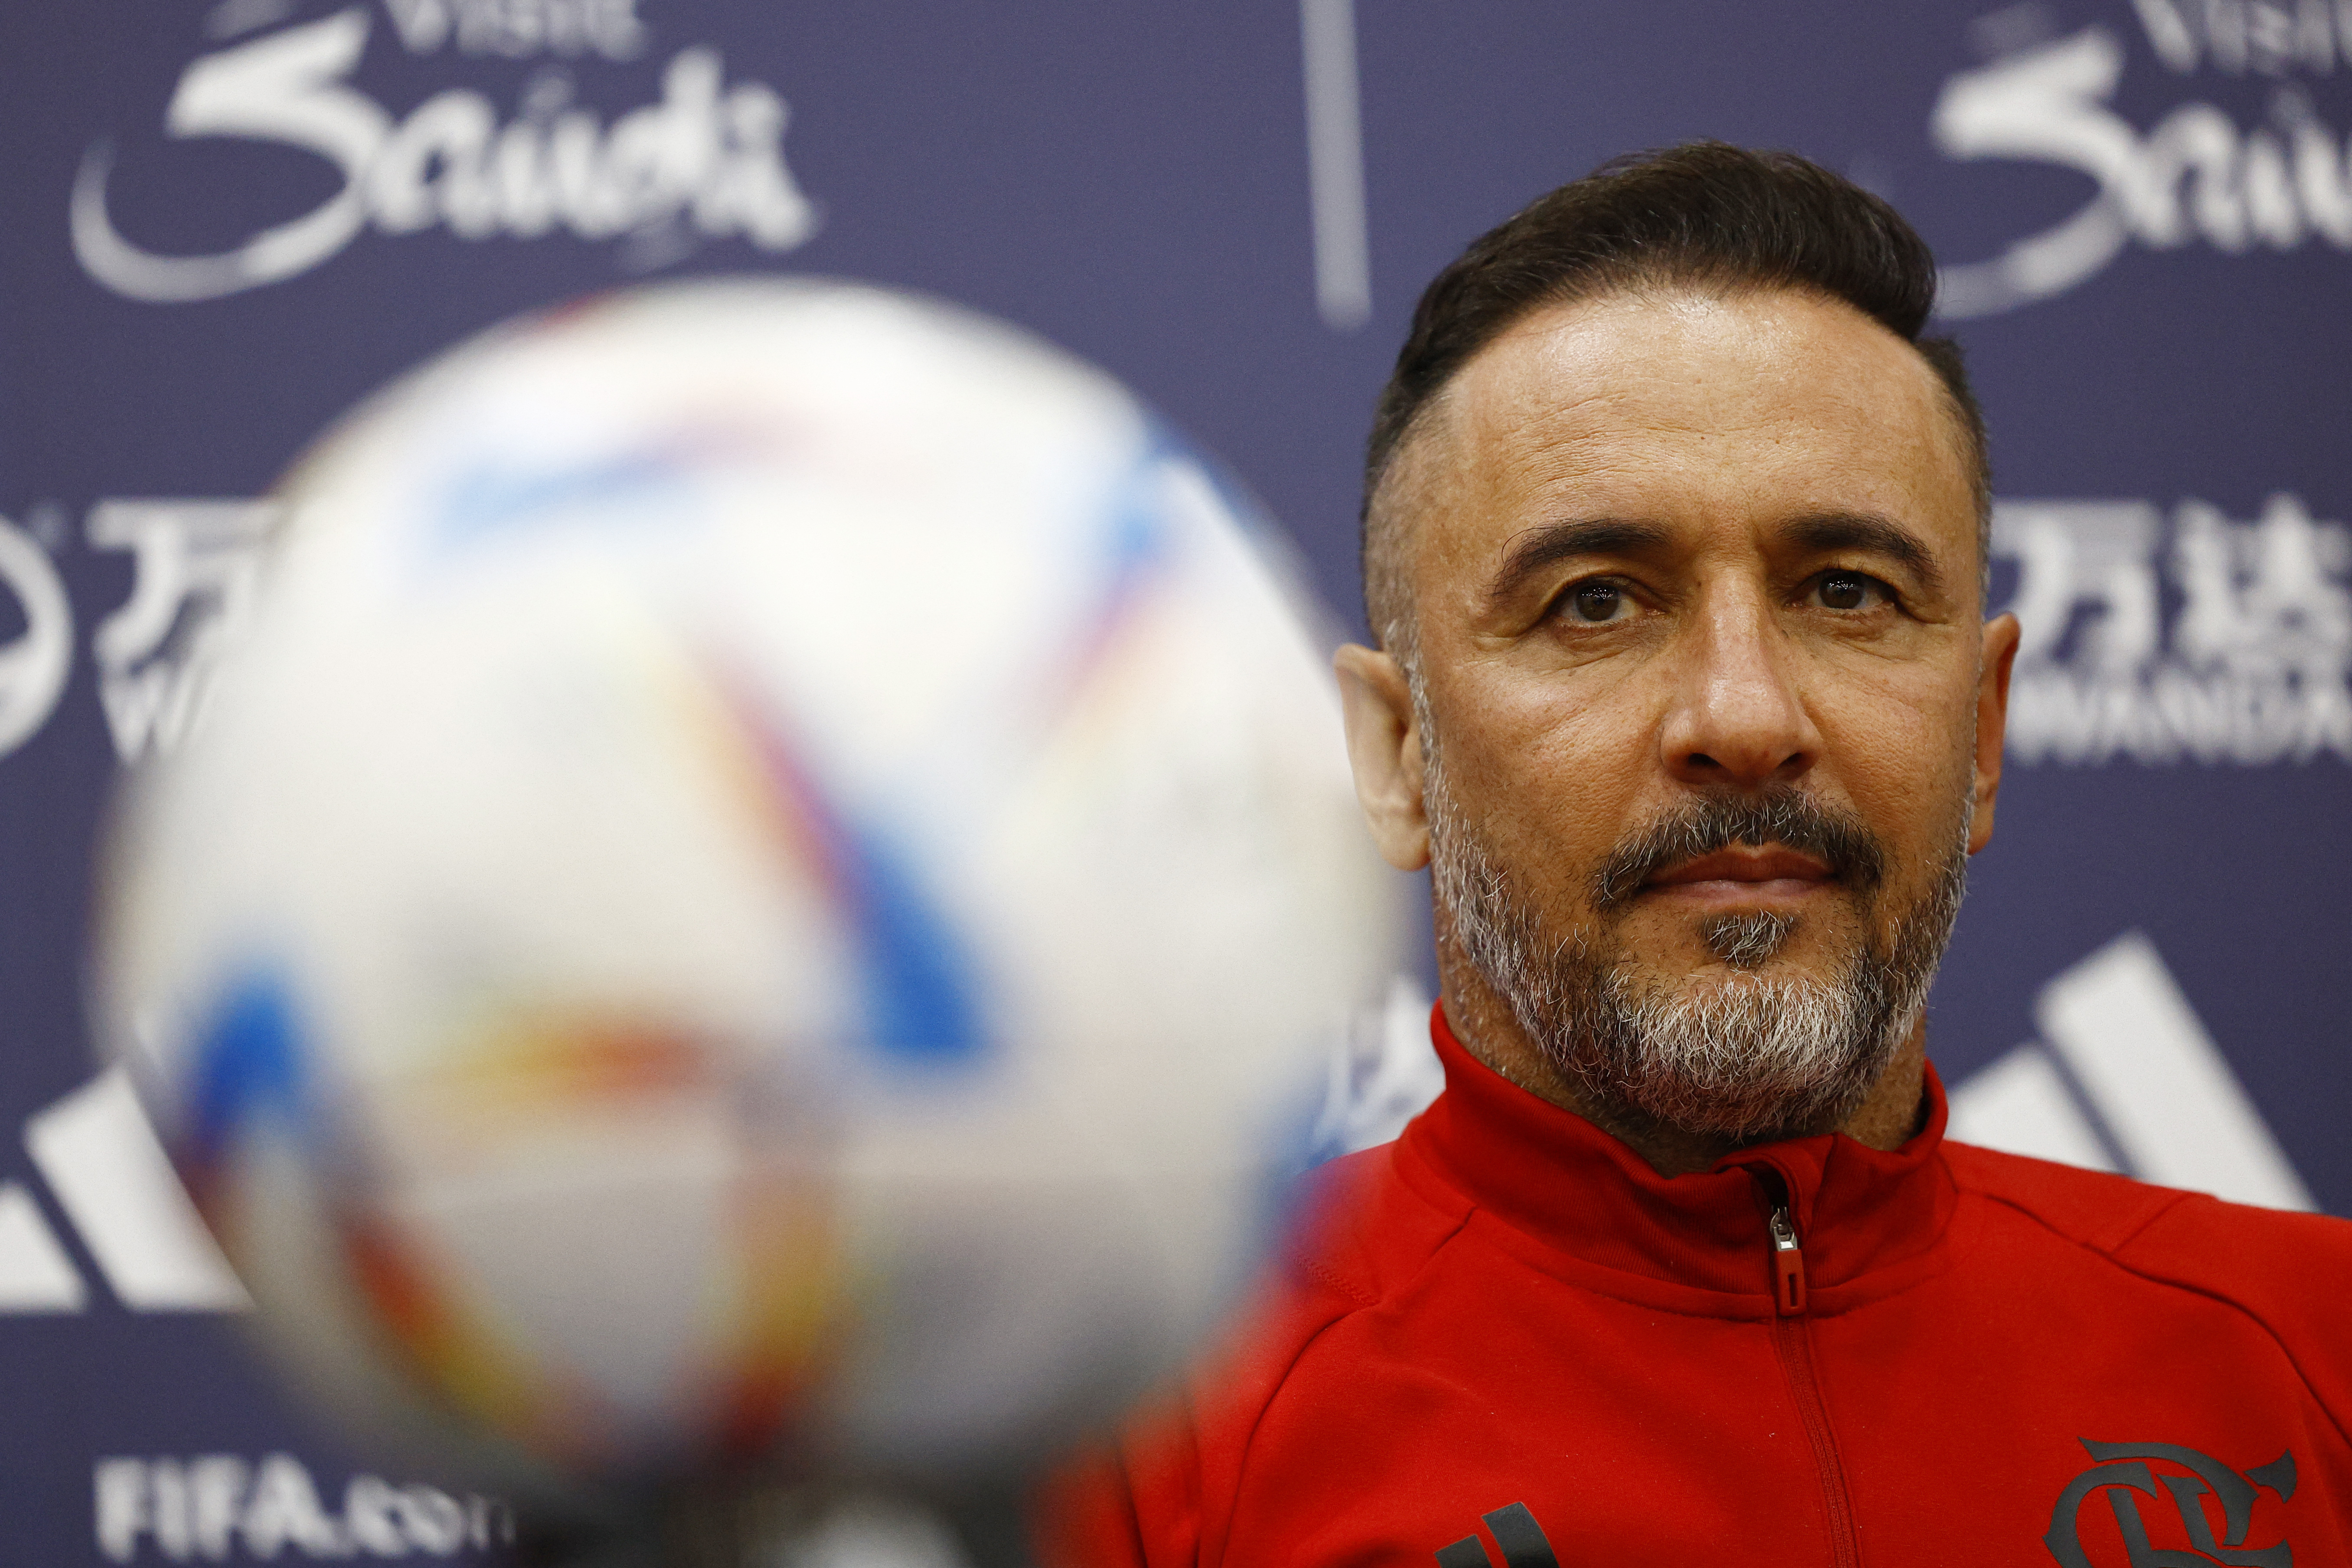 Flamengo won't take Al Hilal lightly in Club World Cup semis, coach says |  Reuters